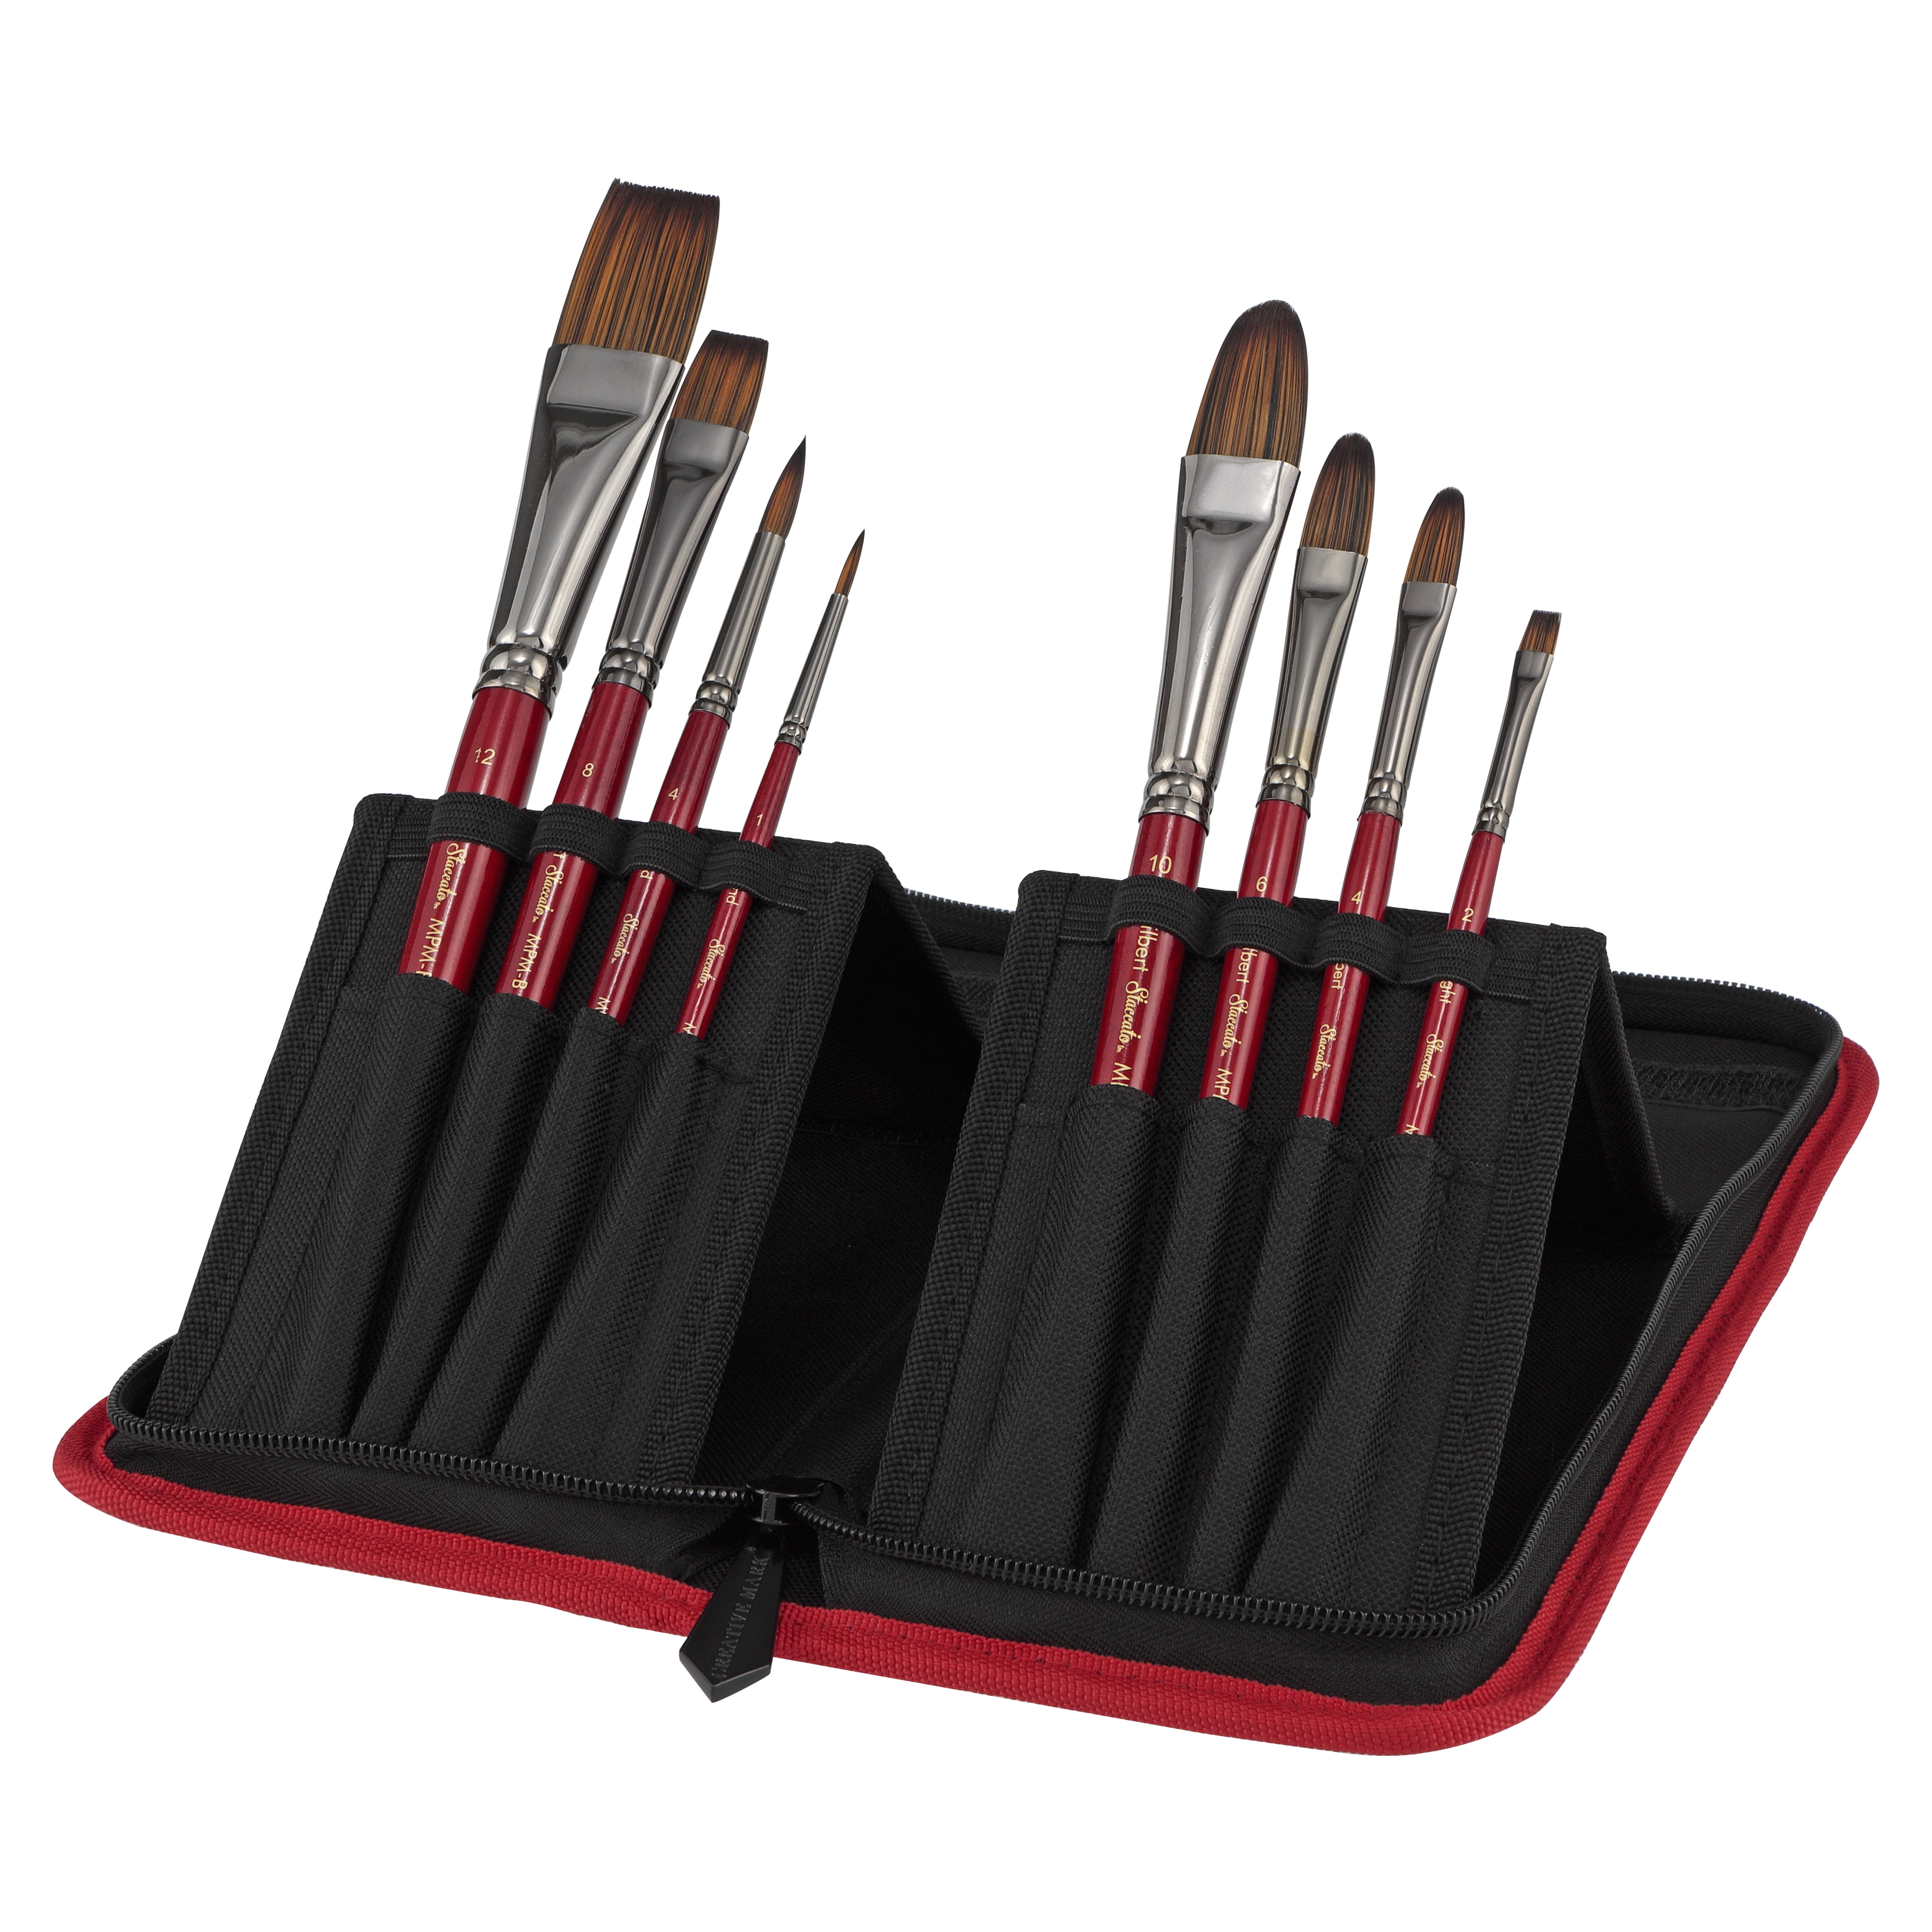  Creative Mark Folding Paint Brush Easel & Travel Case 13 Long  - Compact Watercolor Brush Holder Organizer for Short Handled Paintbrushes  - Durable Paint Brush Bag for Storage - Holds up